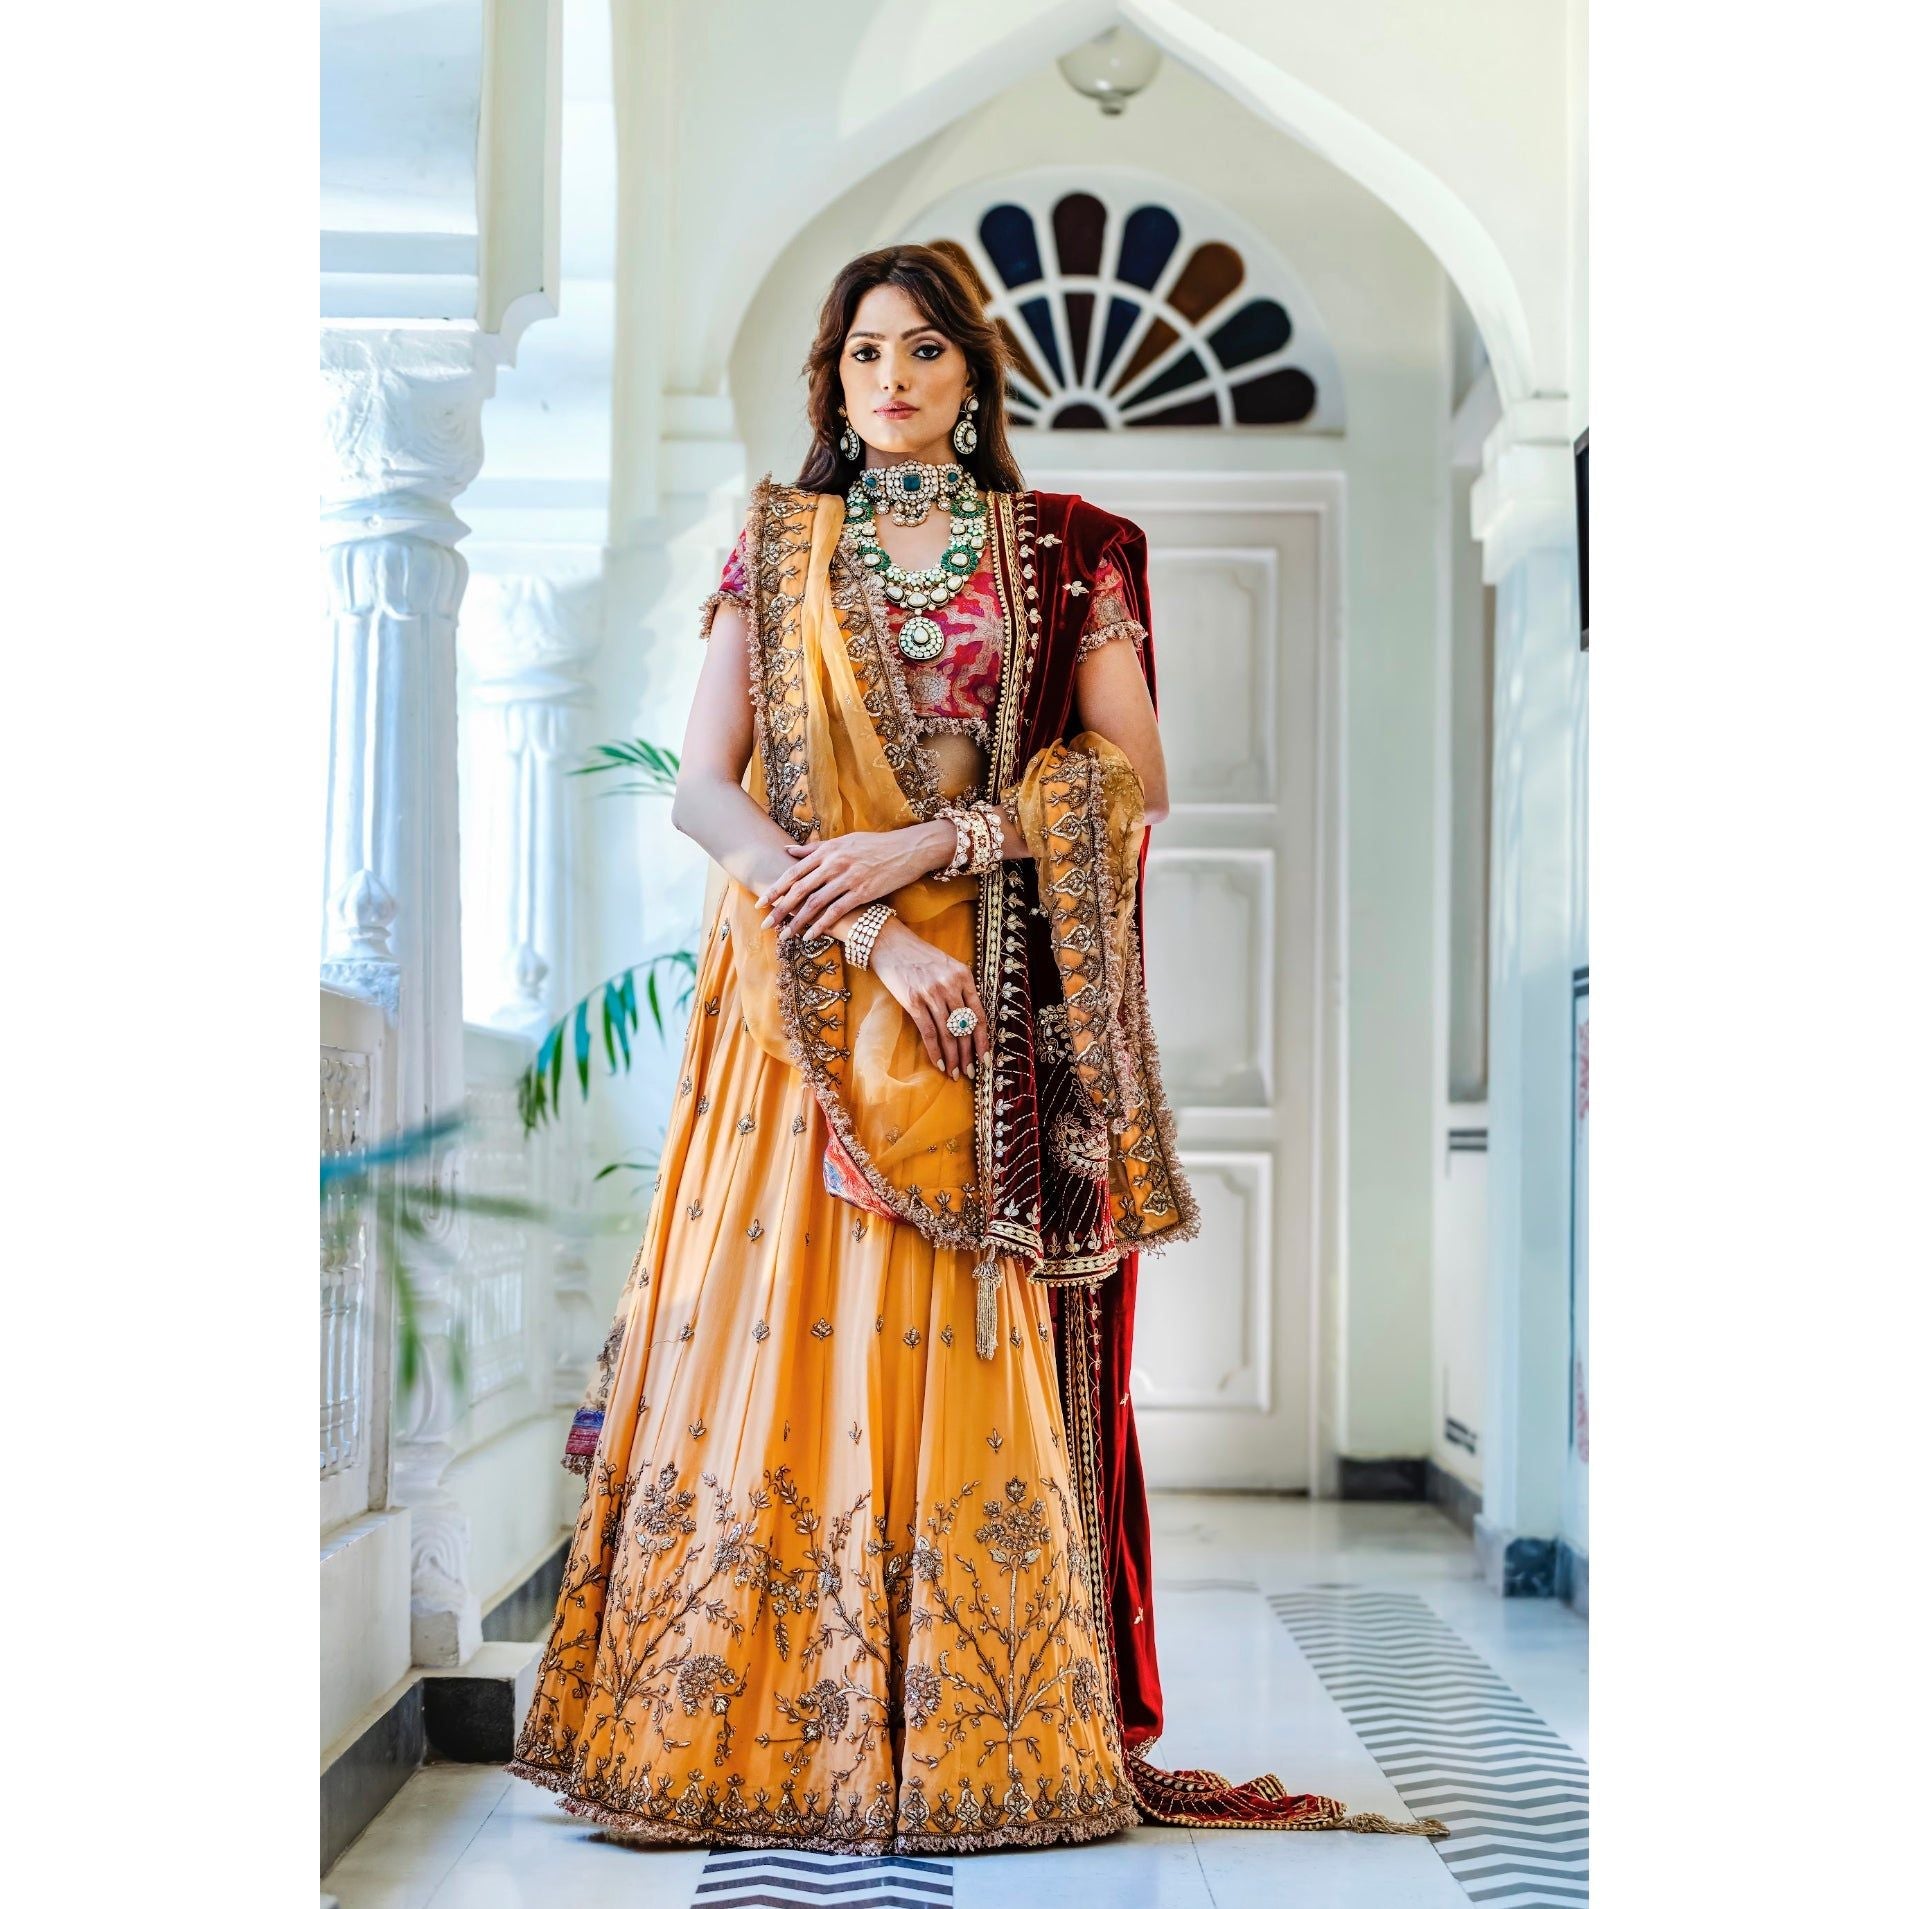 Mustard and Maroon Lehenga Set - Indian Designer Bridal Wedding Outfit